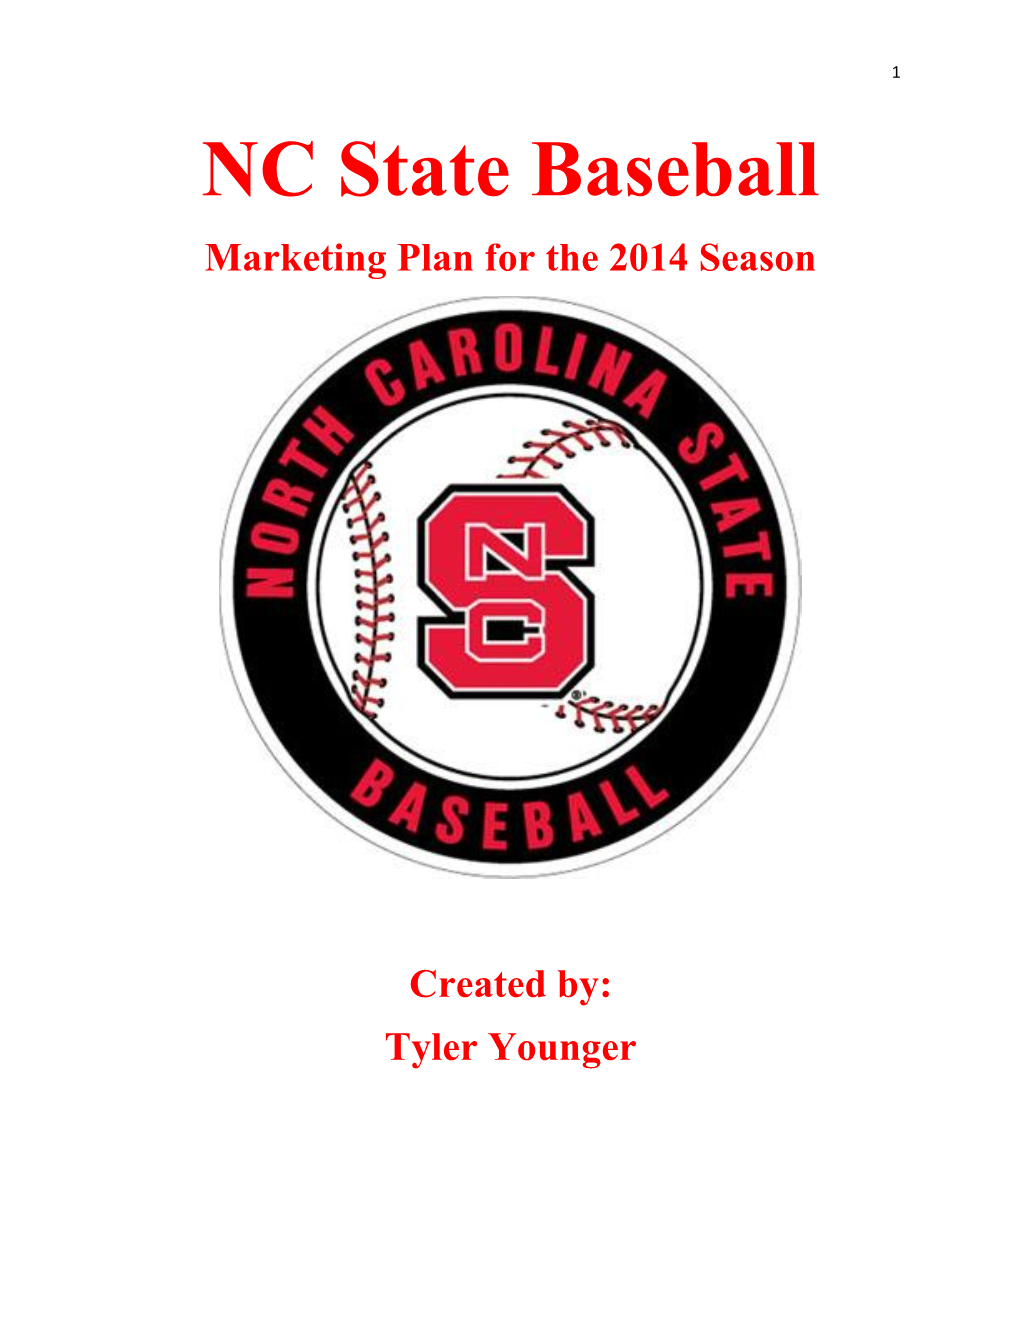 NC State Baseball Marketing Plan for the 2014 Season